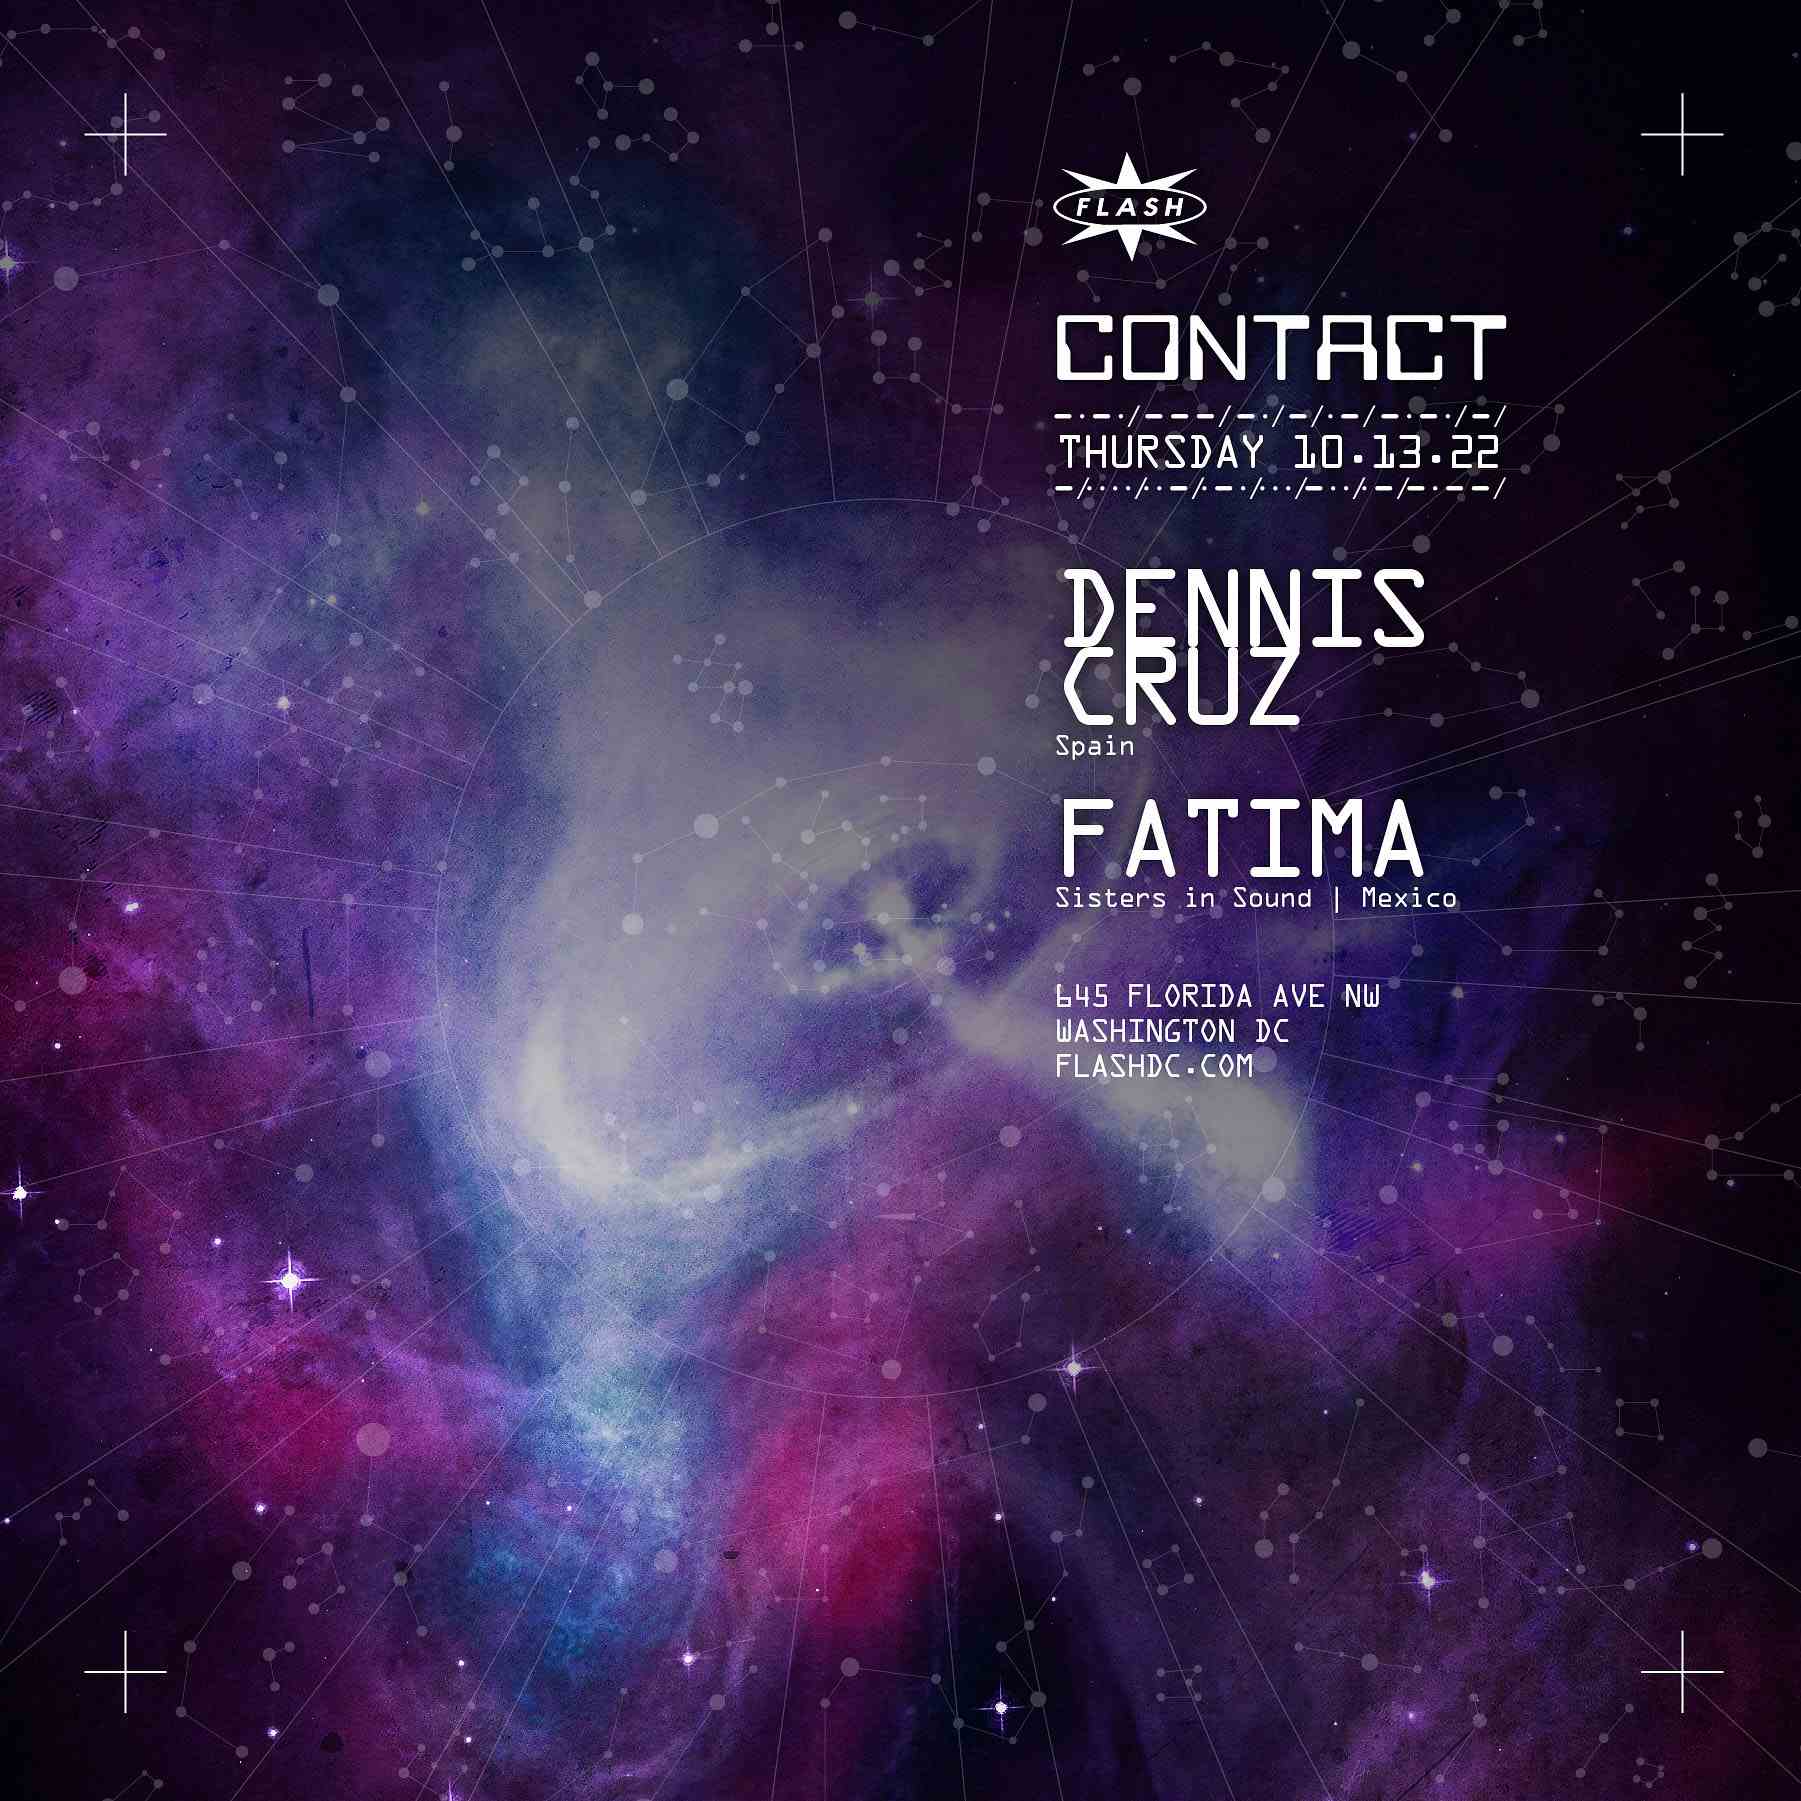 CONTACT: Dennis Cruz event thumbnail